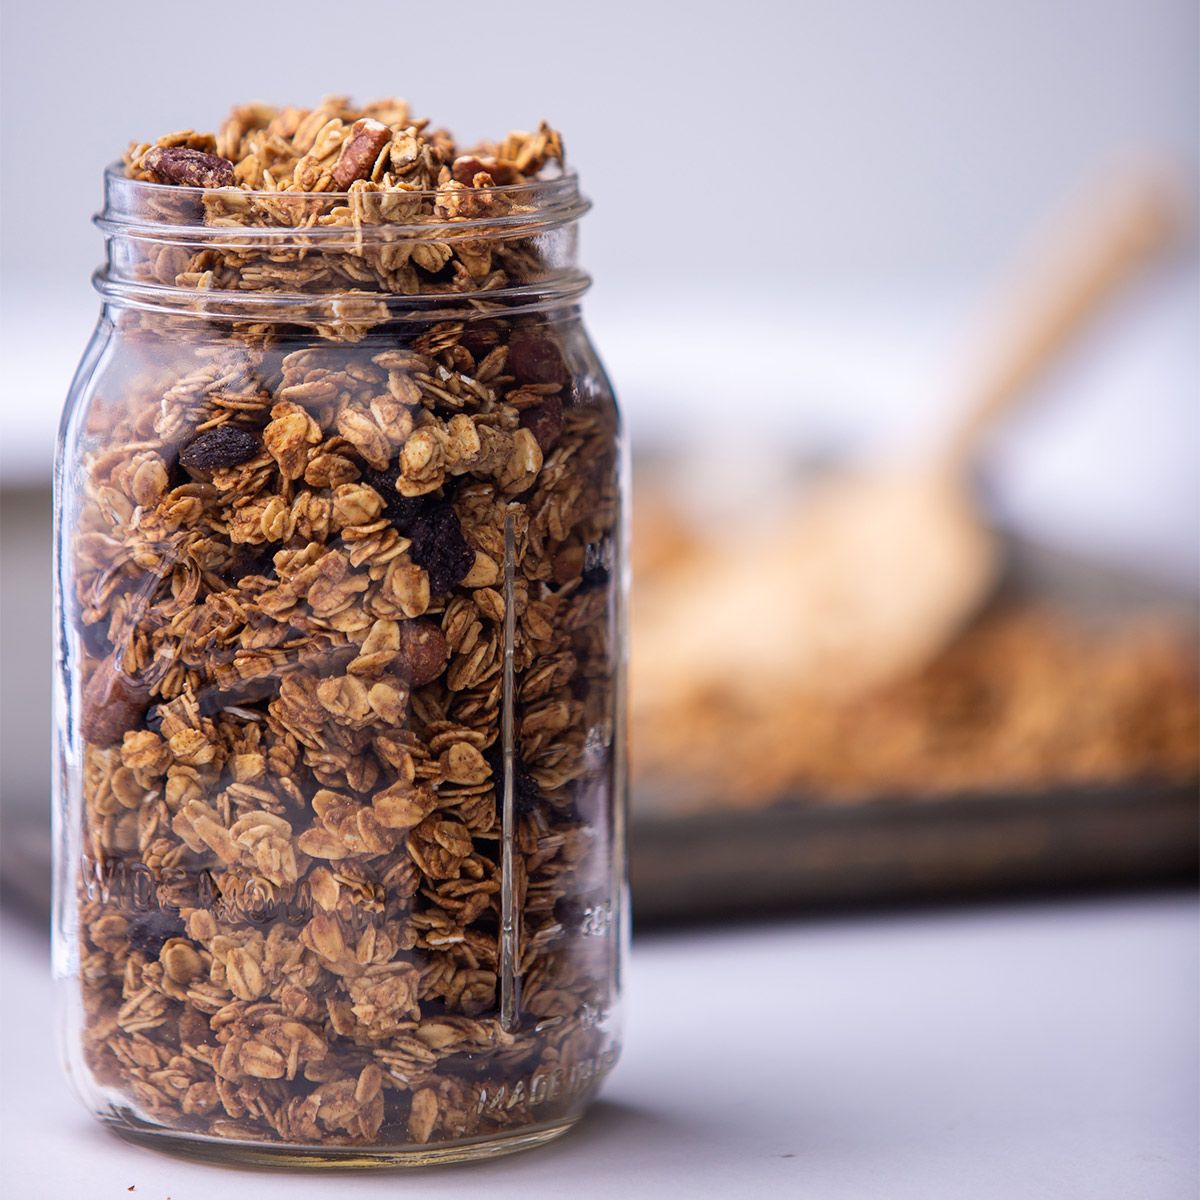 A jar of bulk granola sitting on a countertop